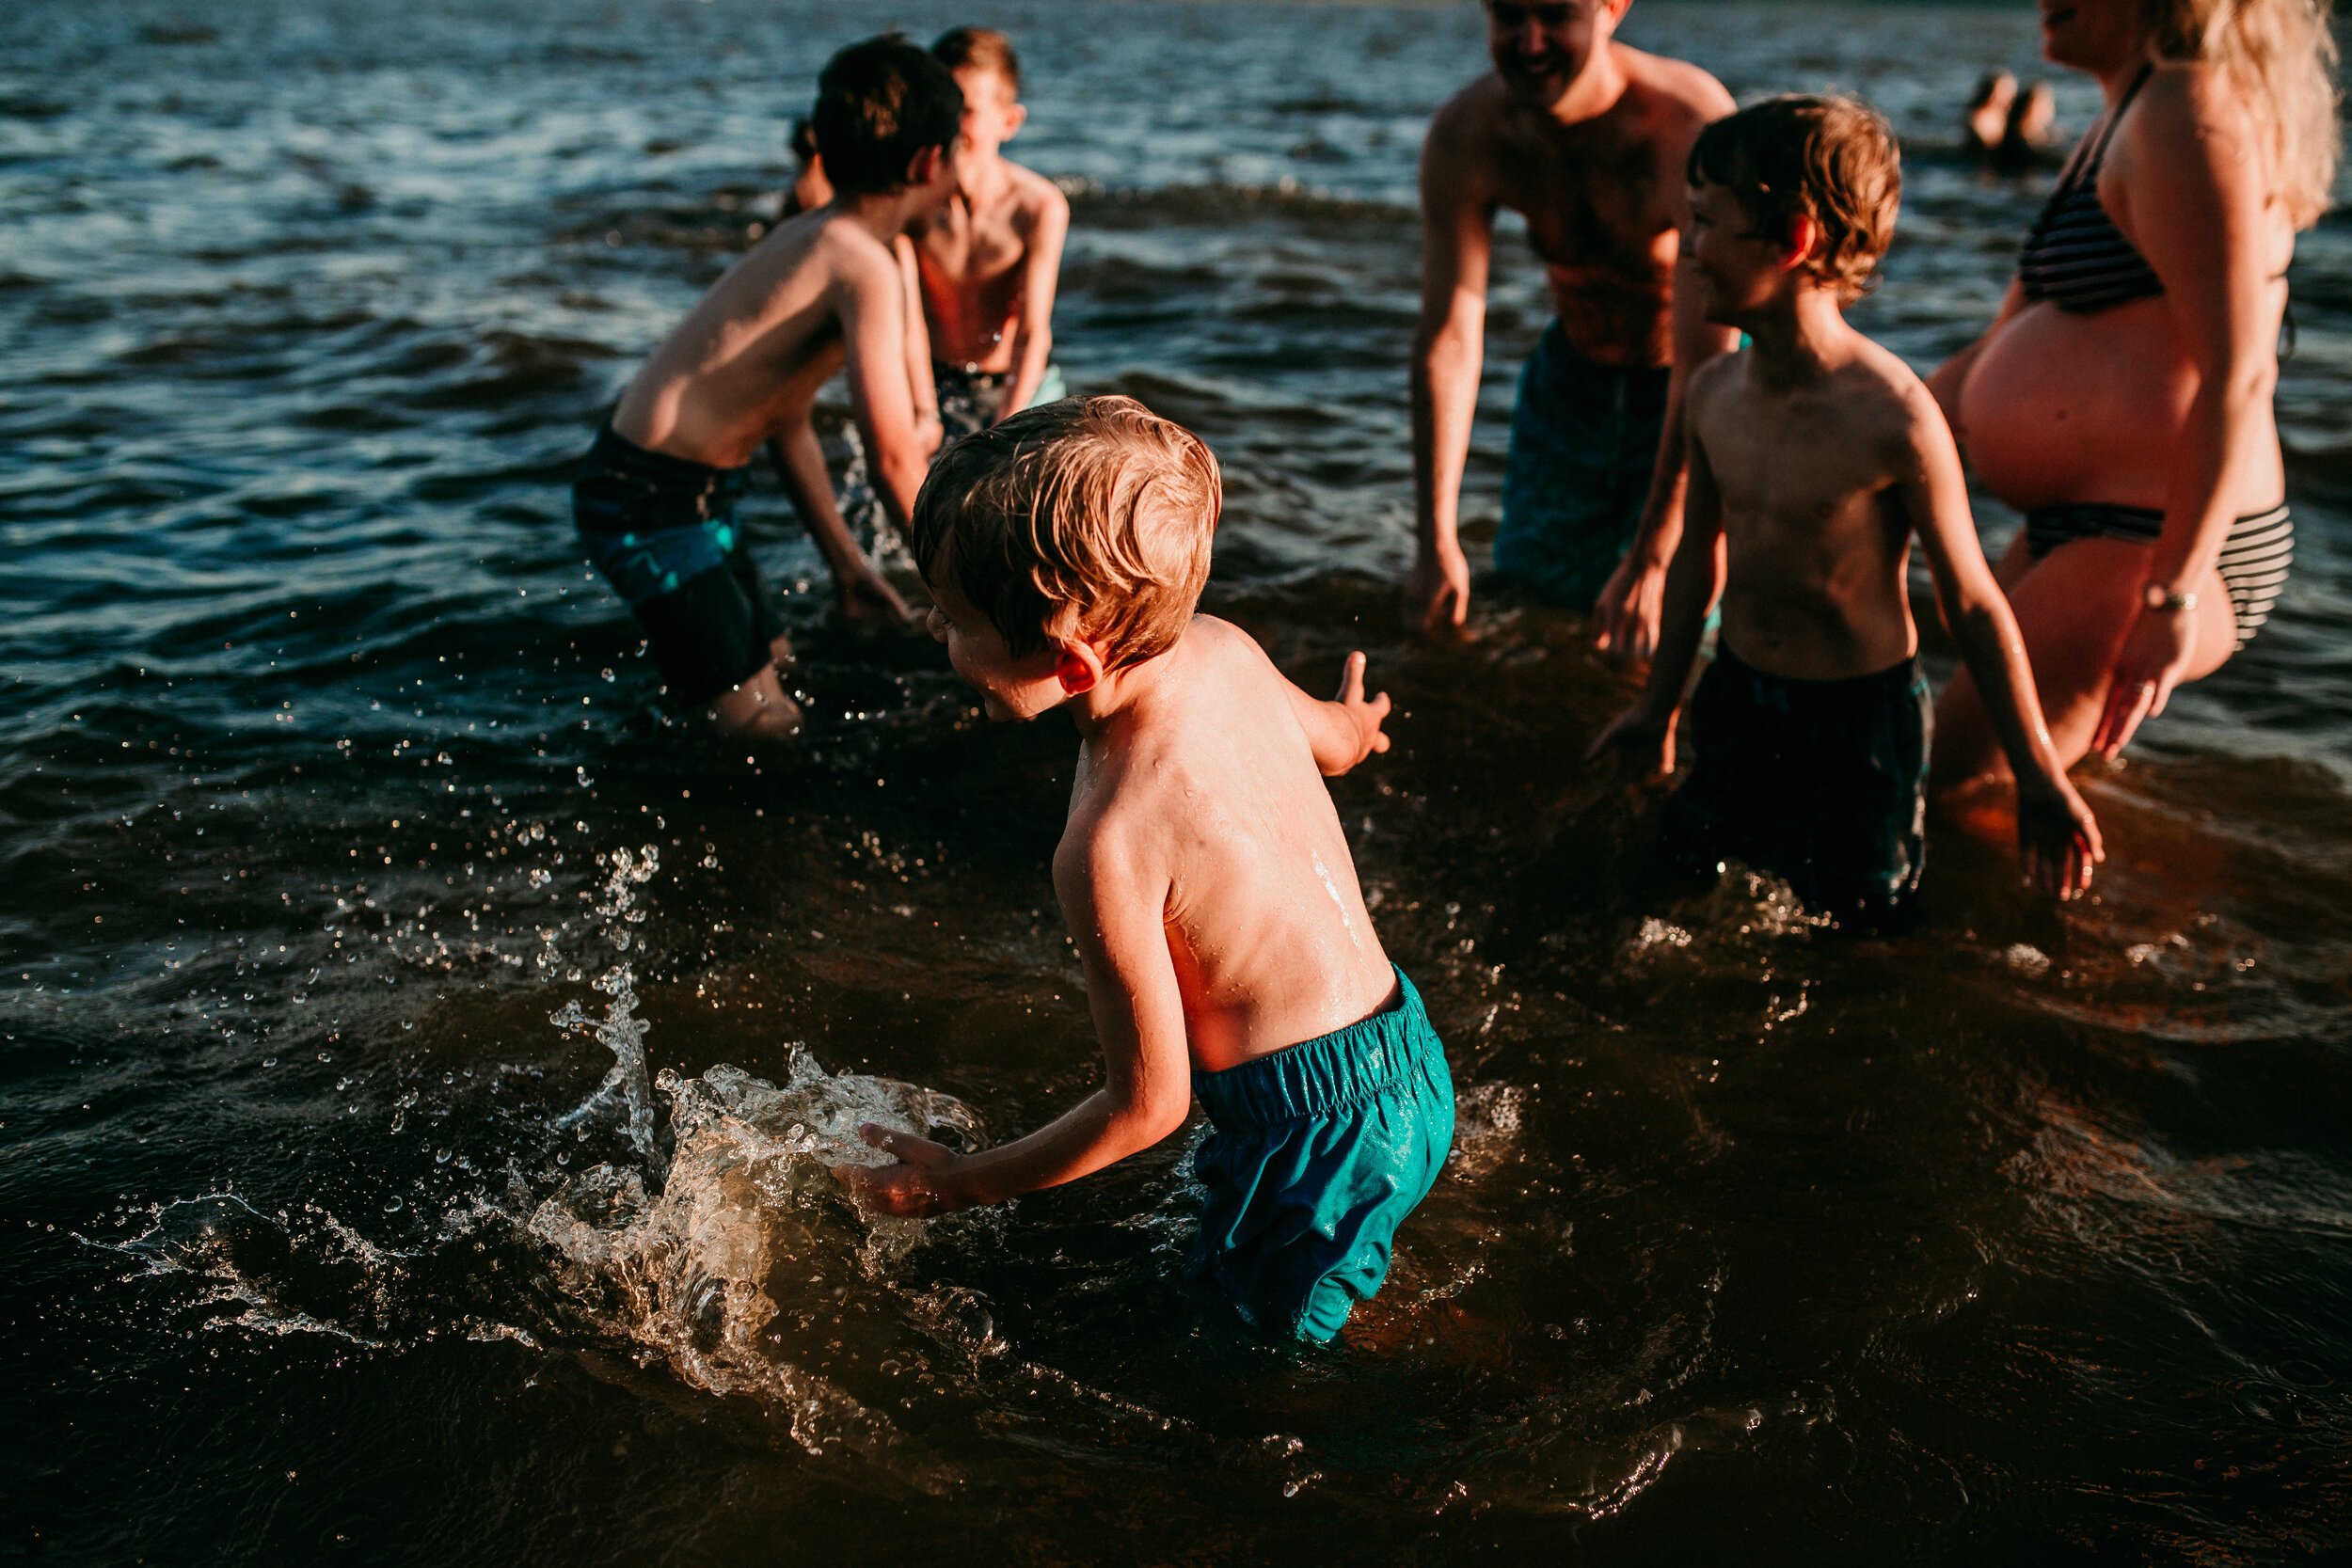 family of boys splash around in the lake at sunset in blue swim trunks